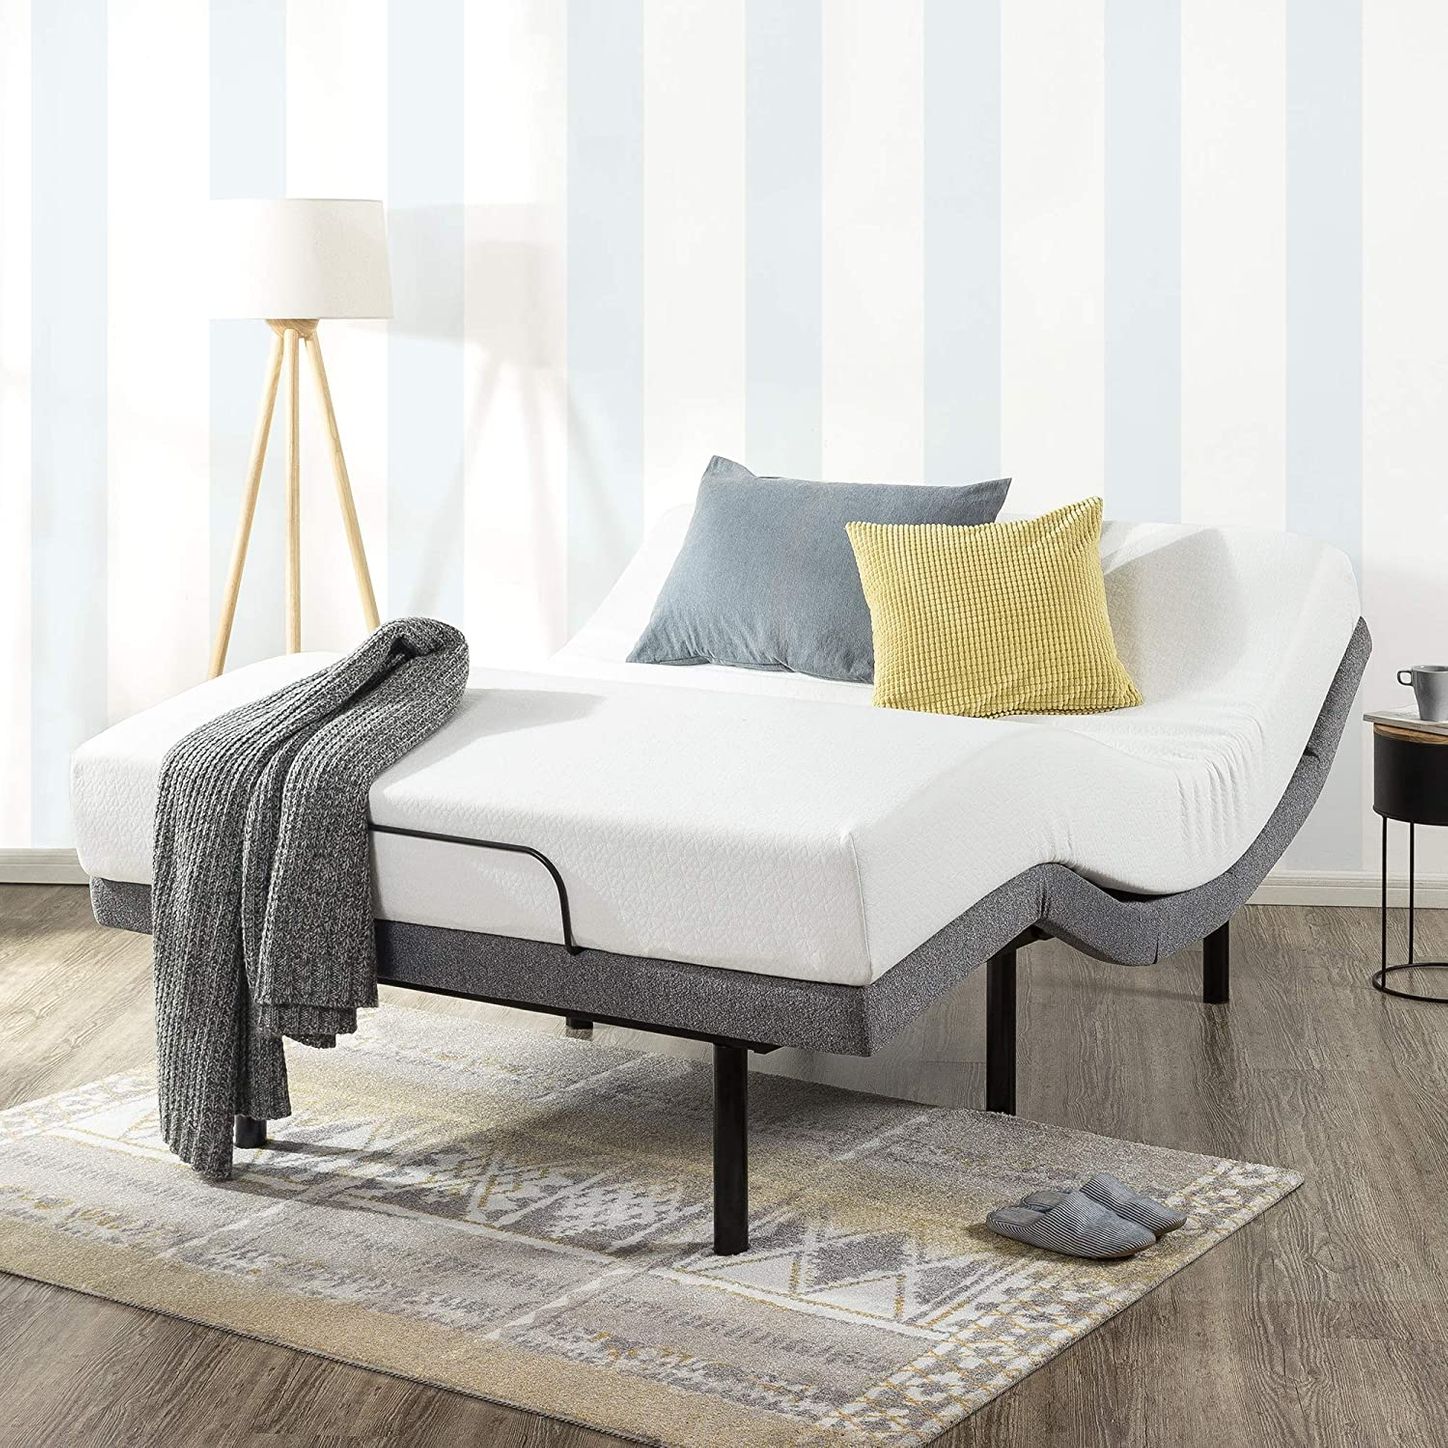 10 Best Adjustable Bed Bases 2022 The, What Is Best Adjustable Bed Frame